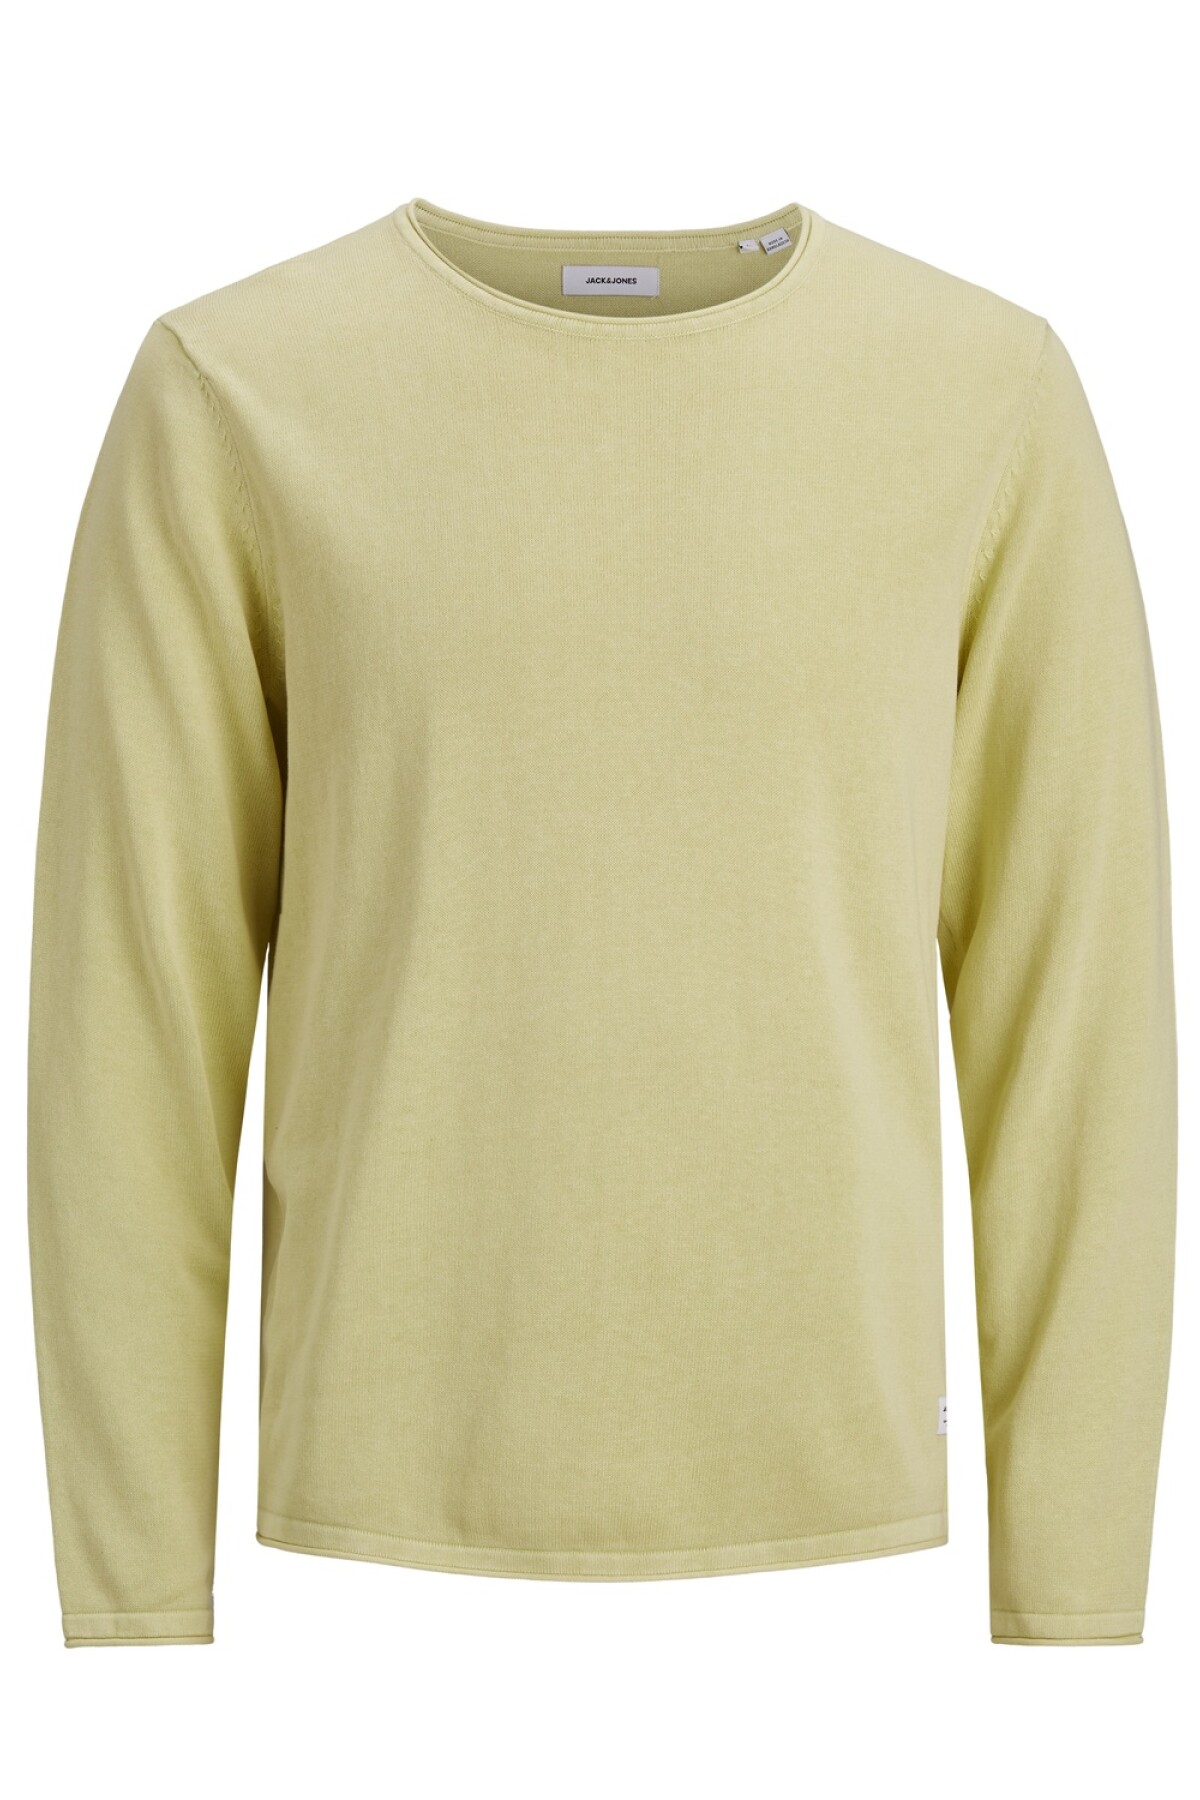 Sweater Leo Ligero Golden Mist